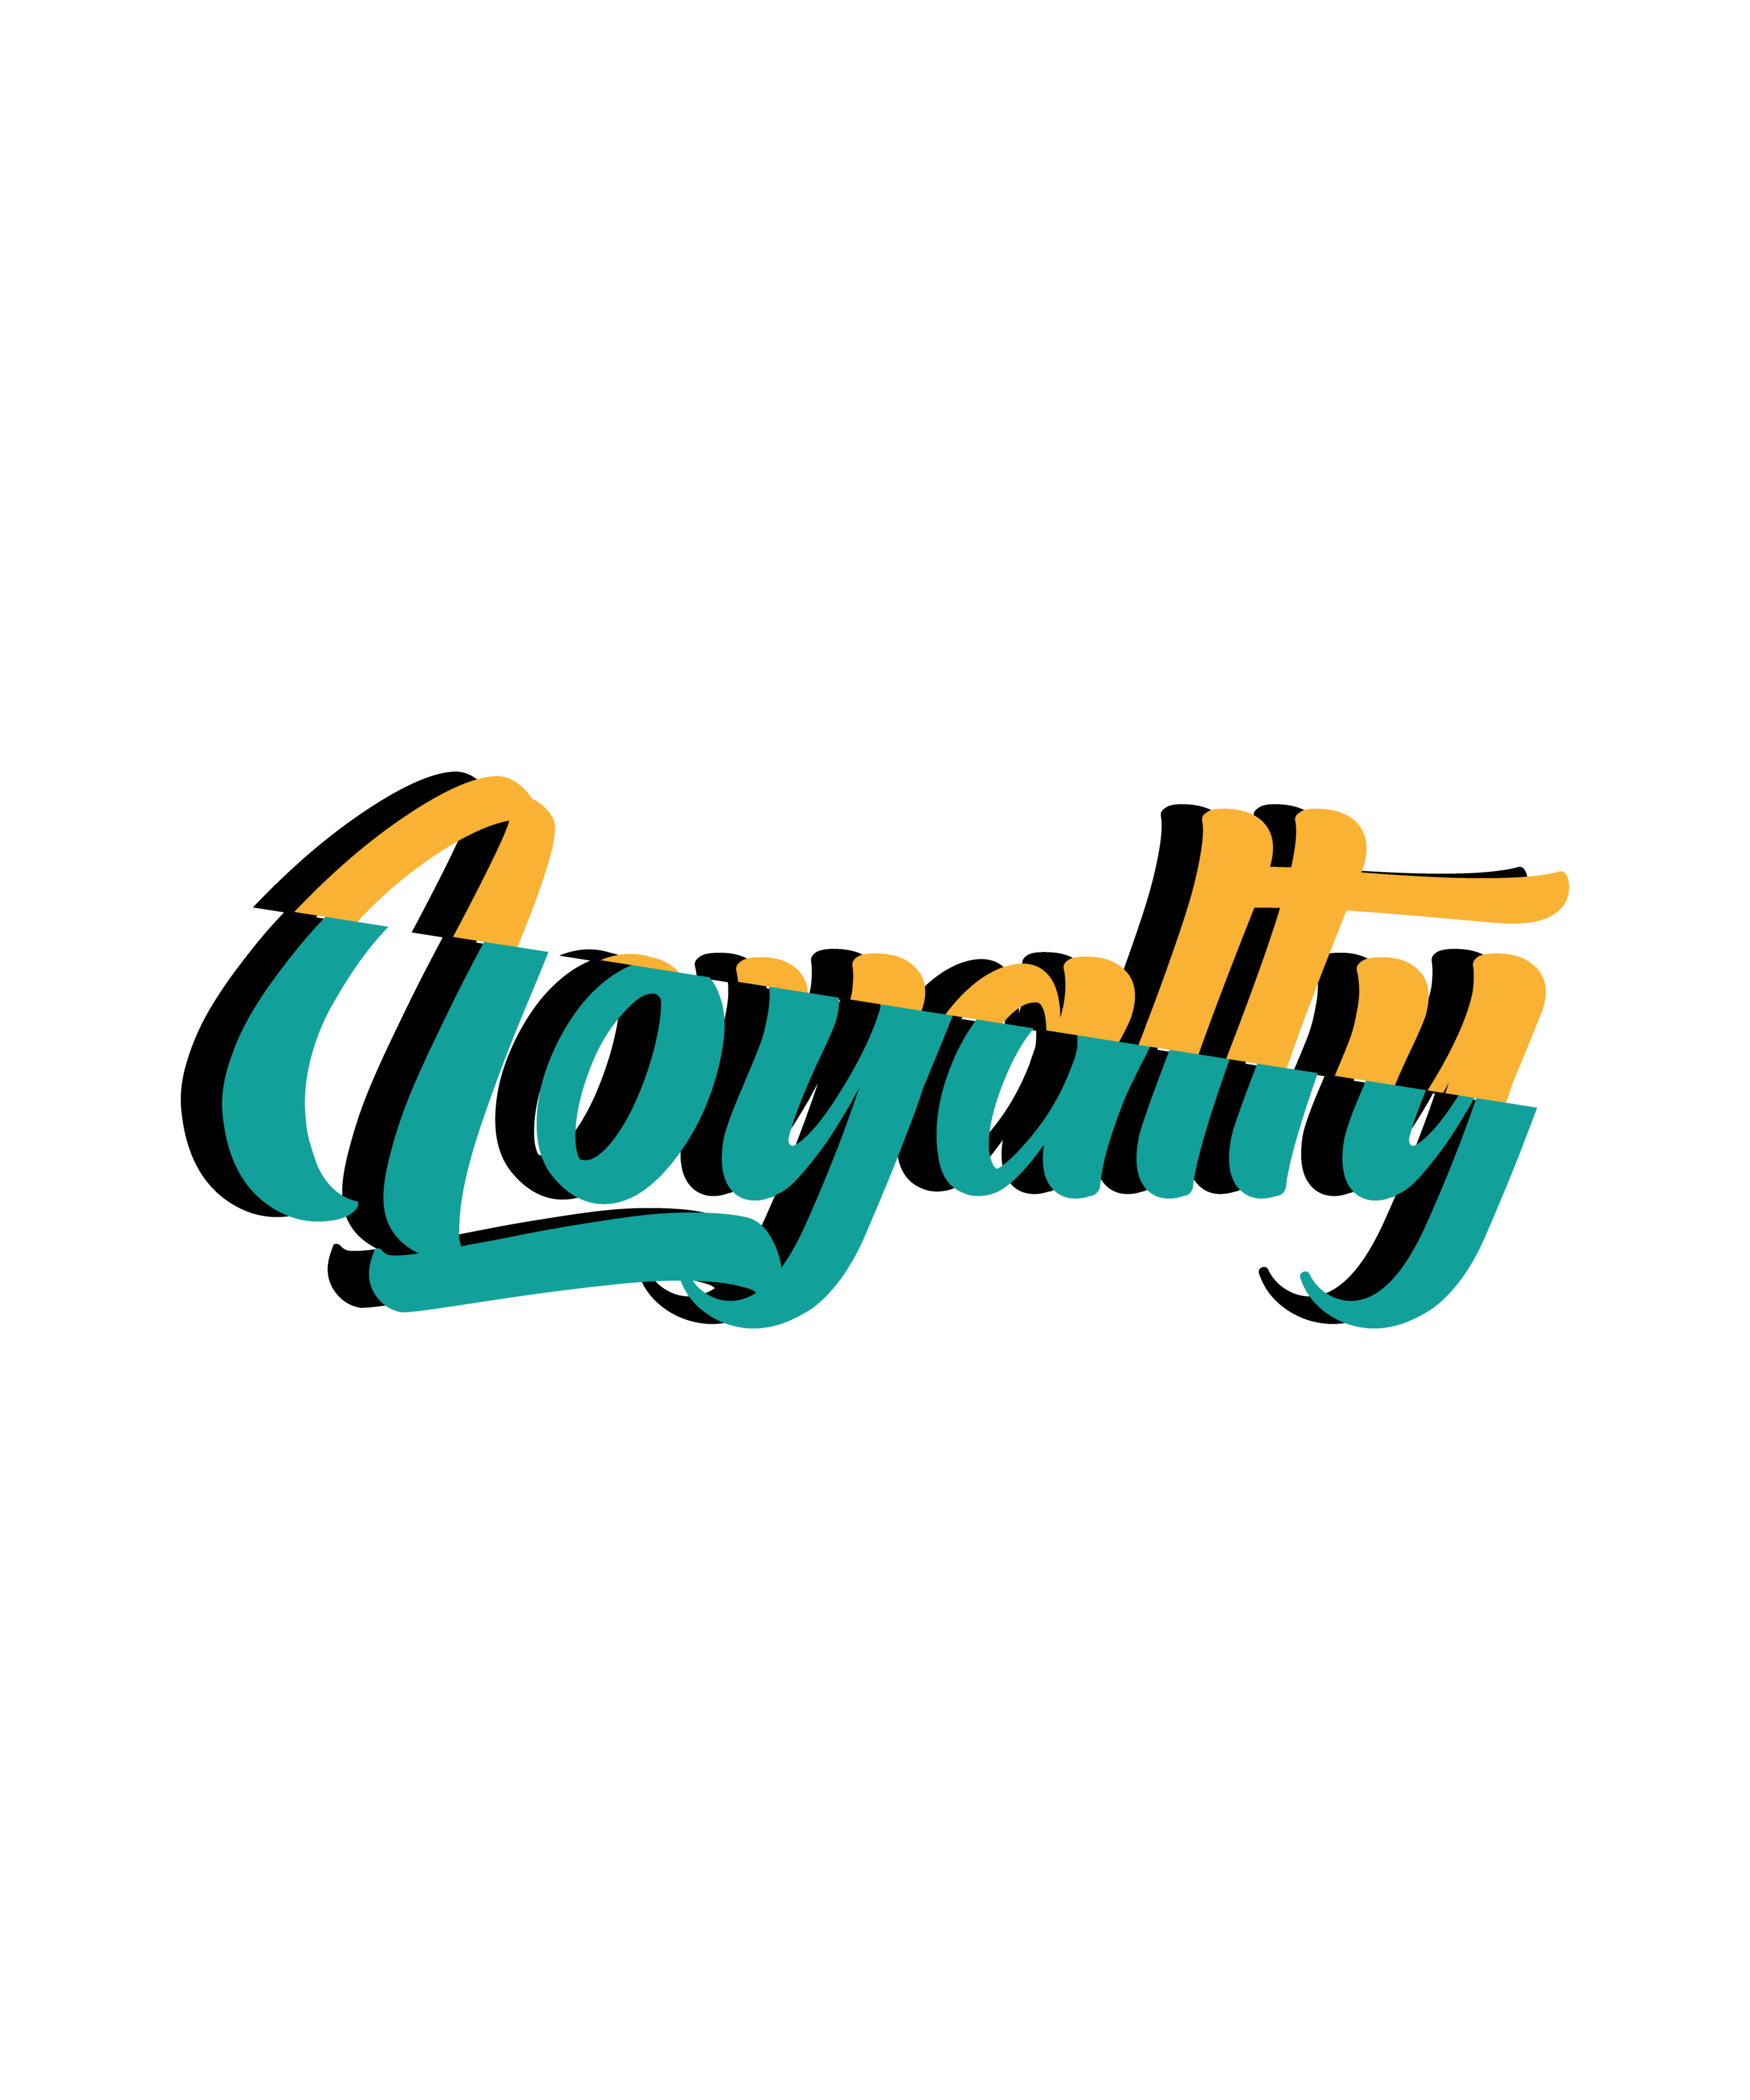 stylish loyalty tyopgraphy